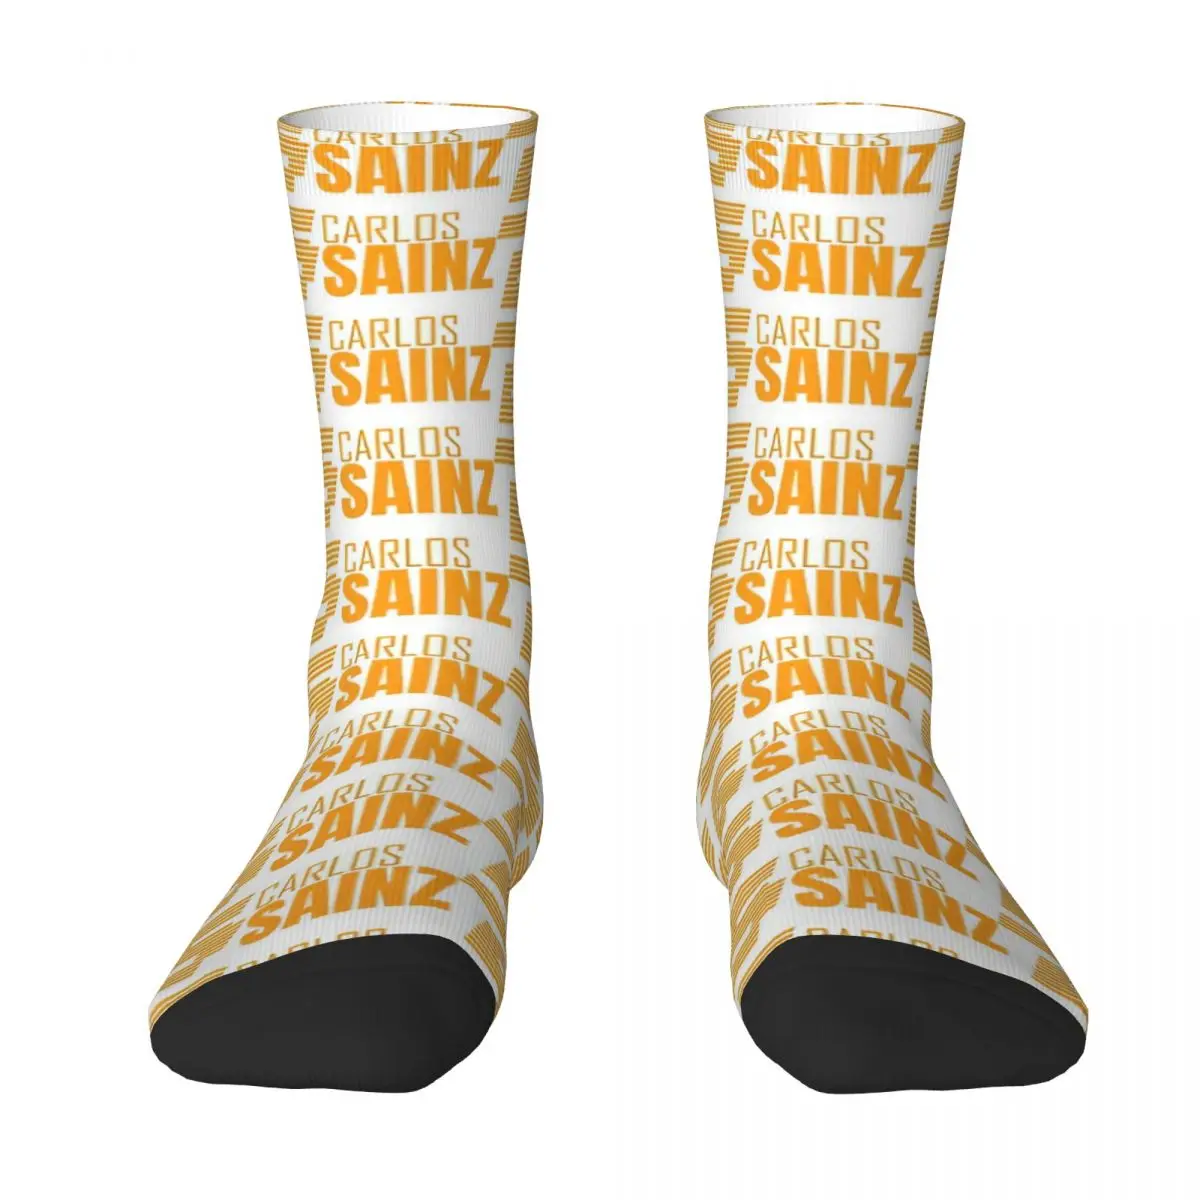 Carlos Sainz 55 Adult Socks Unisex socks,men Socks women Socks